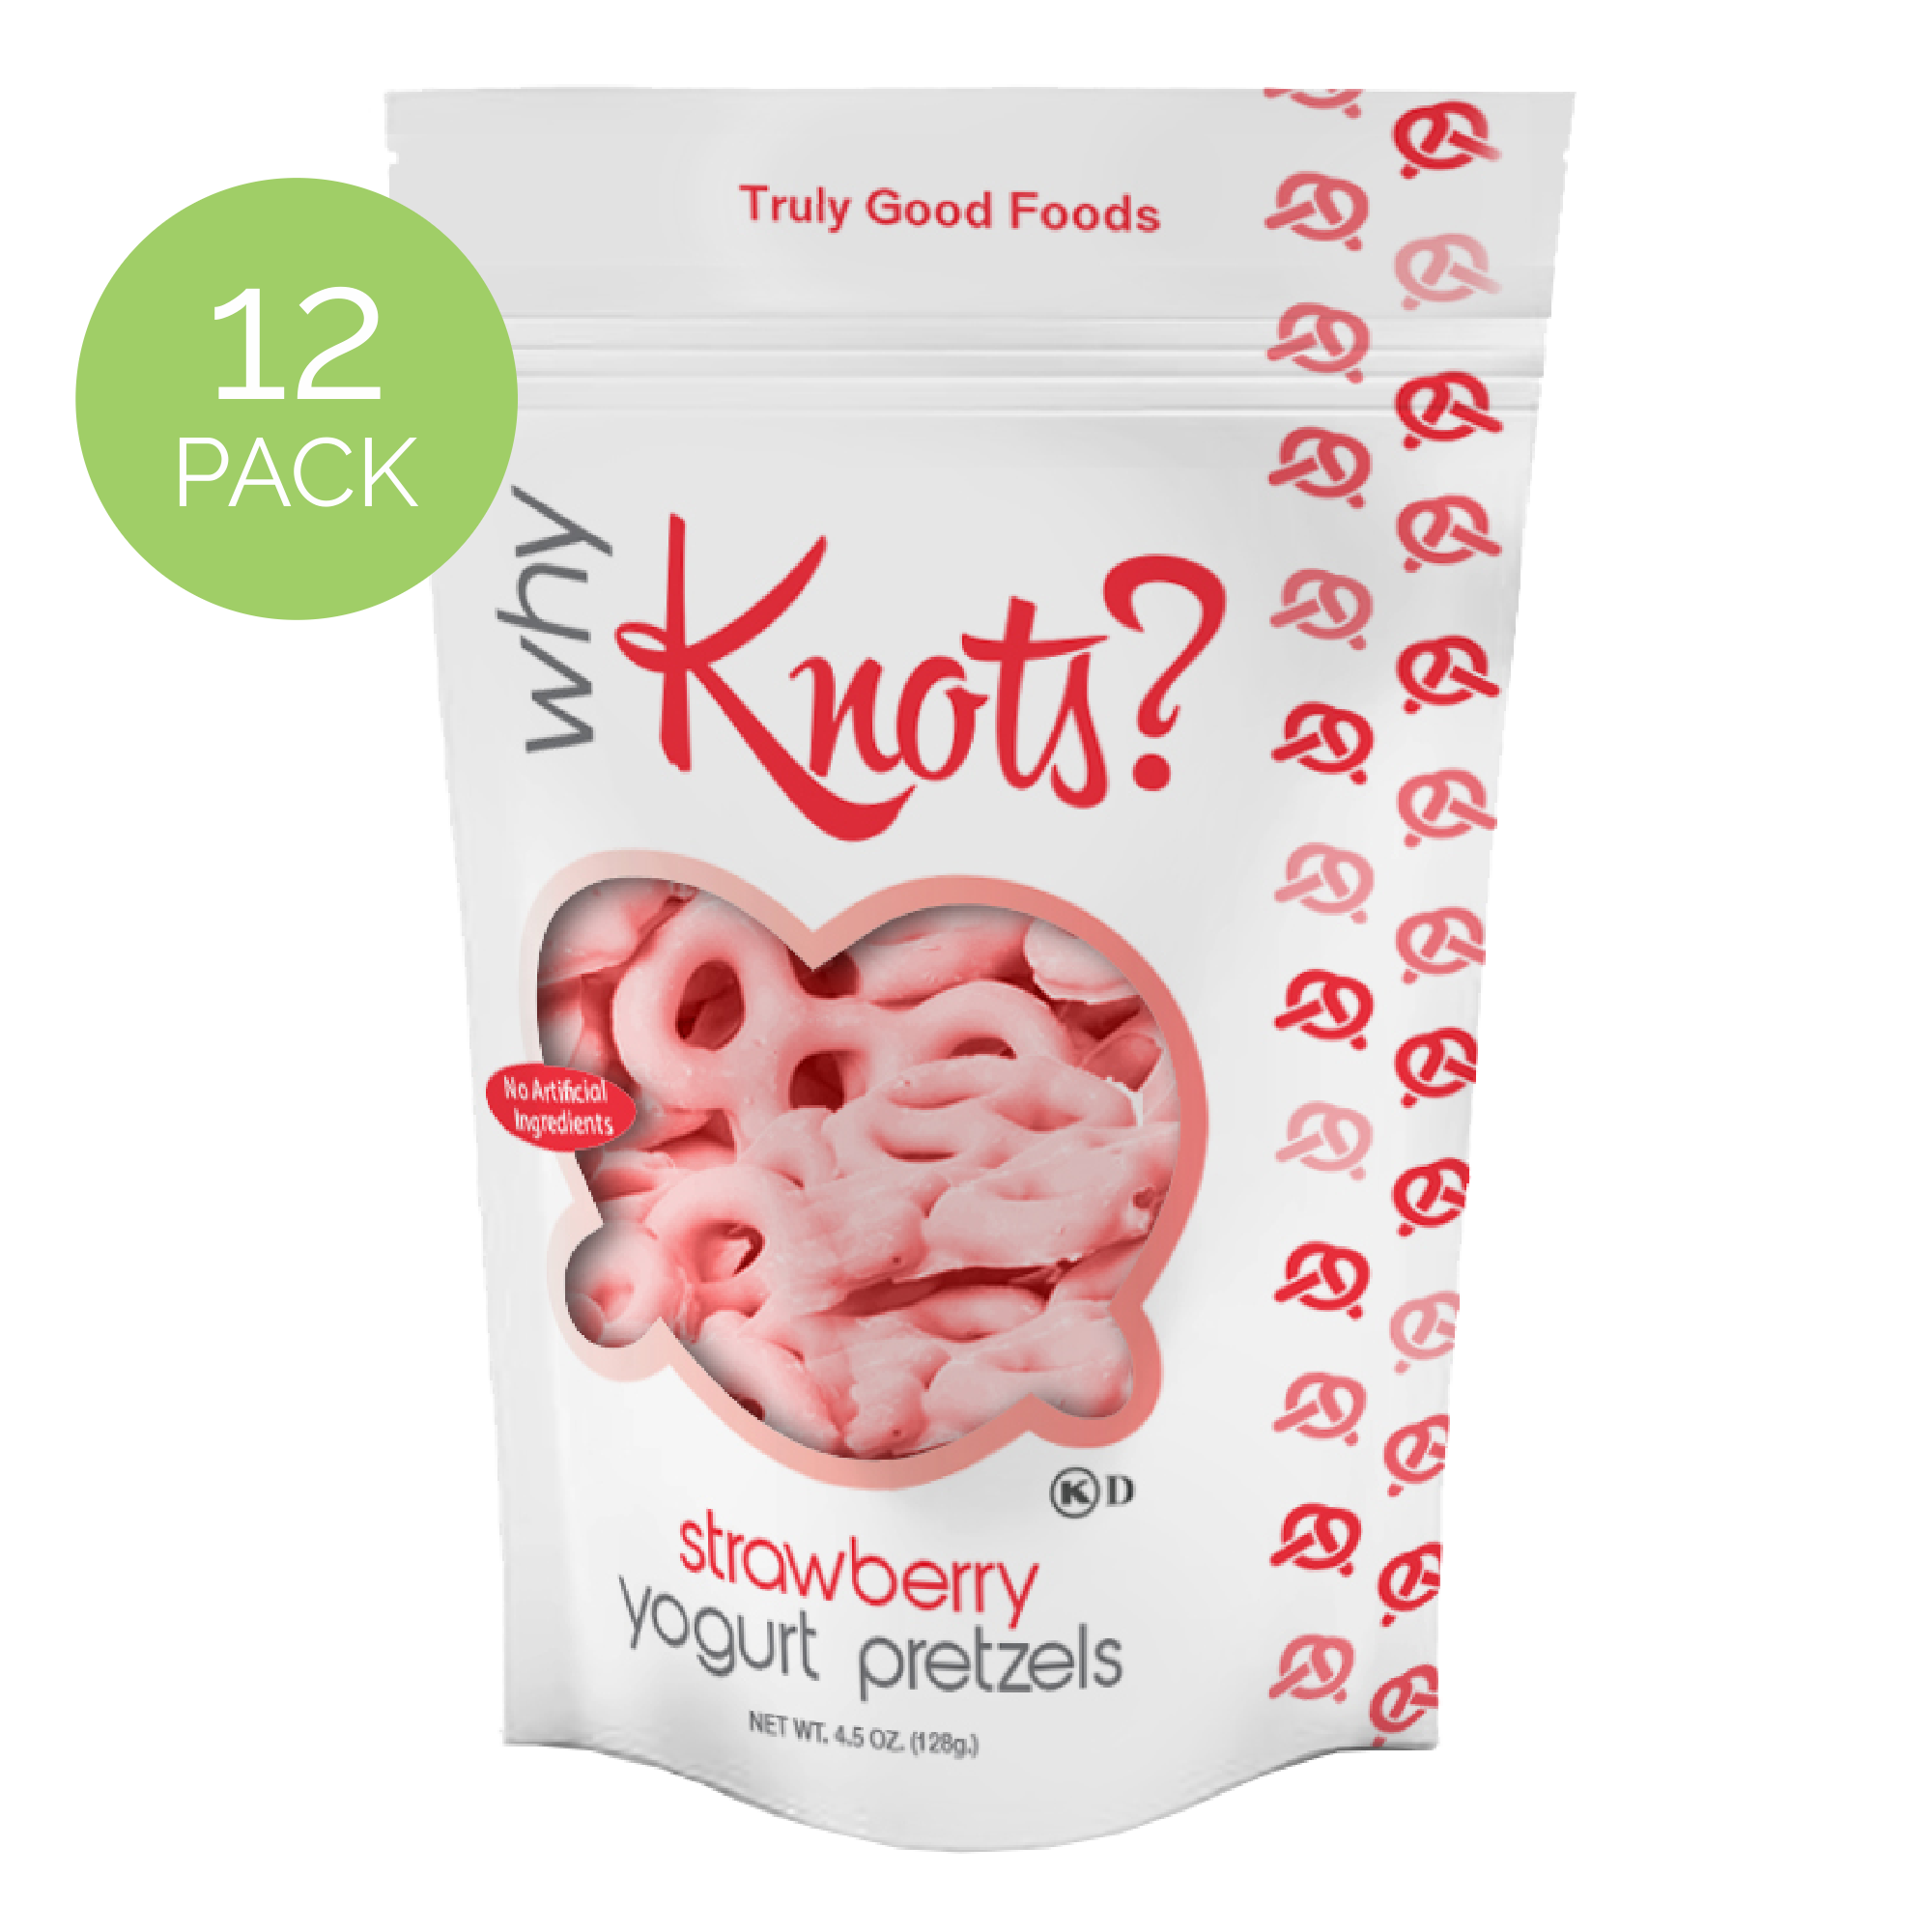 Strawberry Yogurt Pretzels Why Knots? 12-count